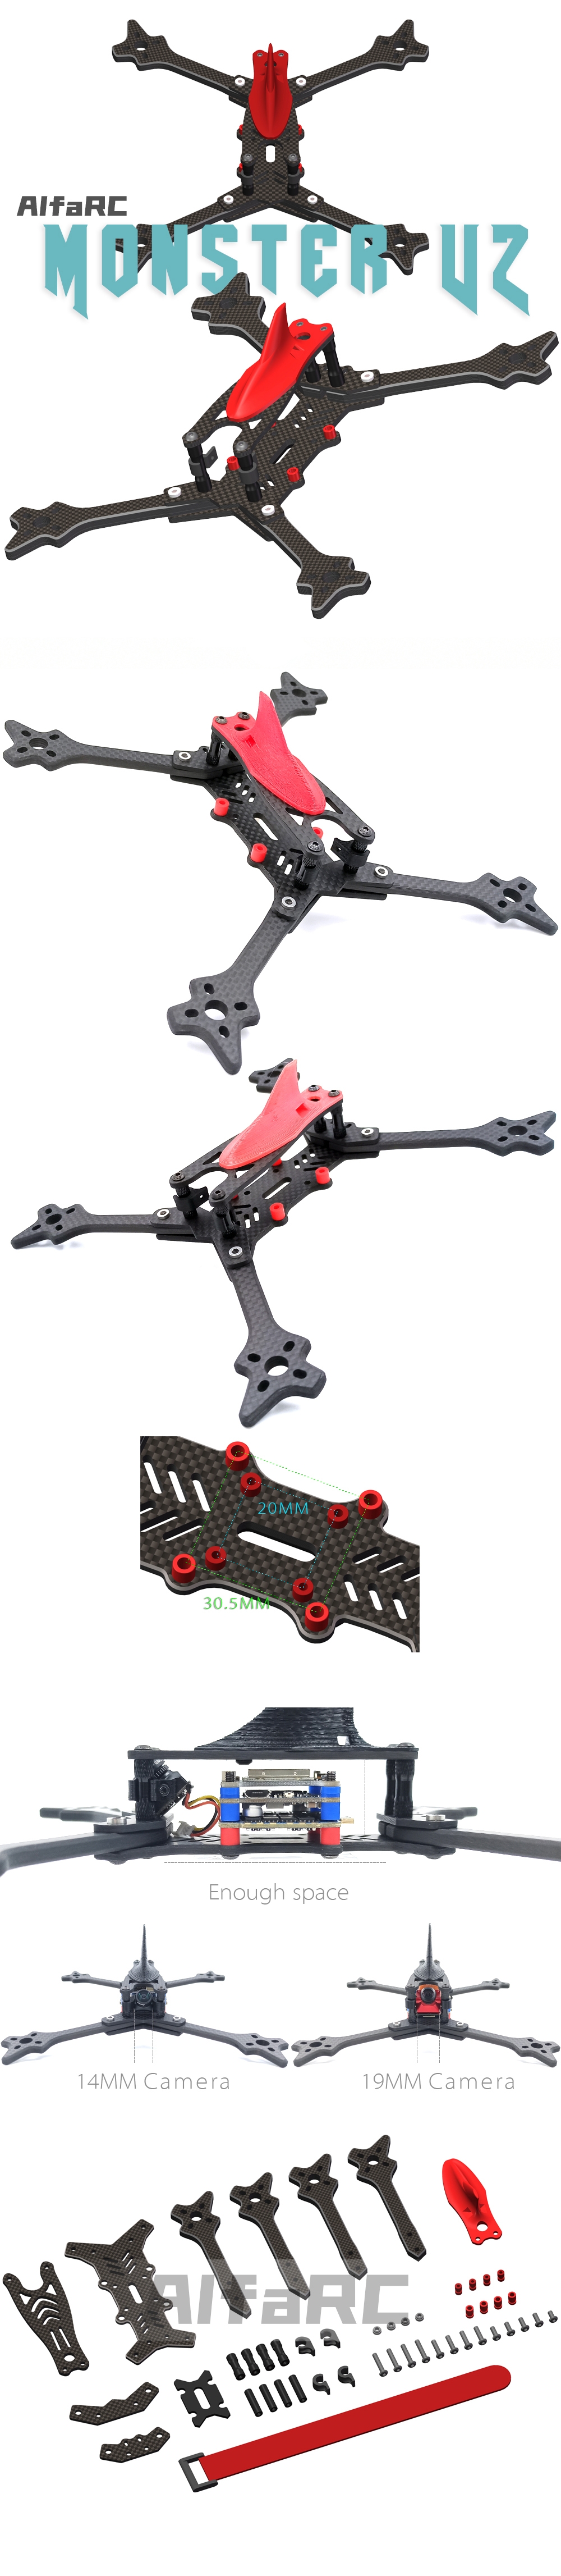 AlfaRC Monster V2 215mm 5 Inch Freestyle True X UAV Frame Kit for RC Drone FPV Racing